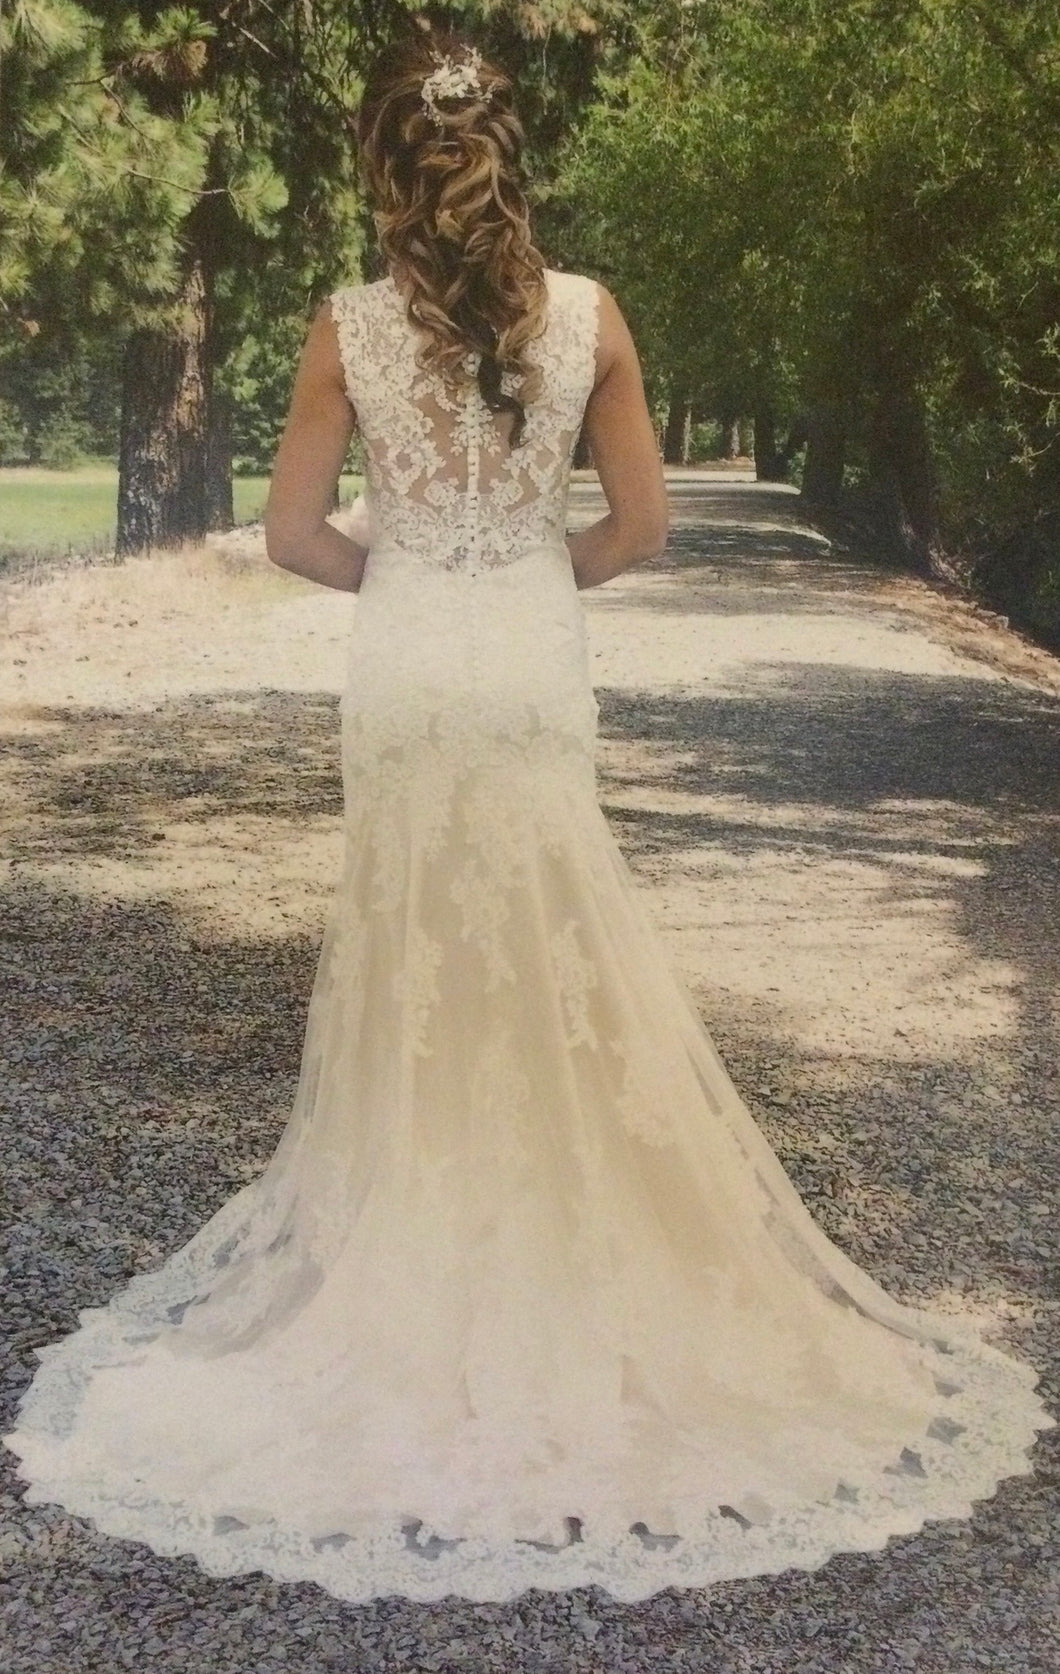 Maggie Sottero 'Melanie 4MS061' wedding dress size-10 PREOWNED